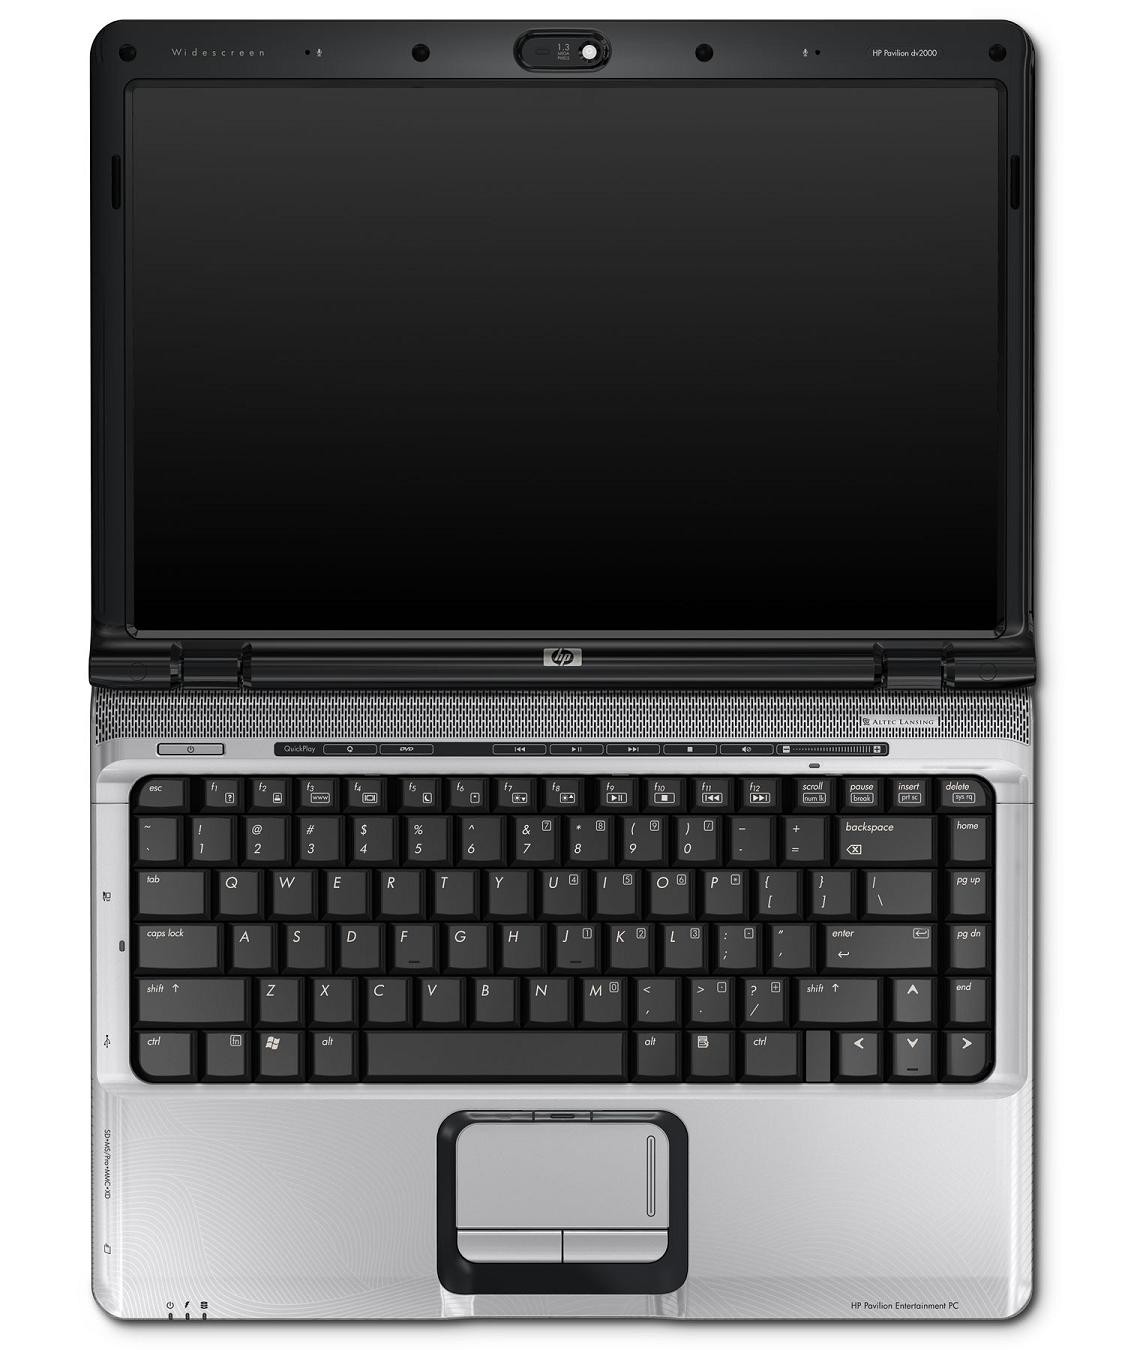 HP-PAVDV2000-CEN-HP Pavilion DV 2000 Refurbished Notebook Centrino Duo 2 GB RAM 160 GB HDD 14.1-inch Windows 7 Pro OS-image